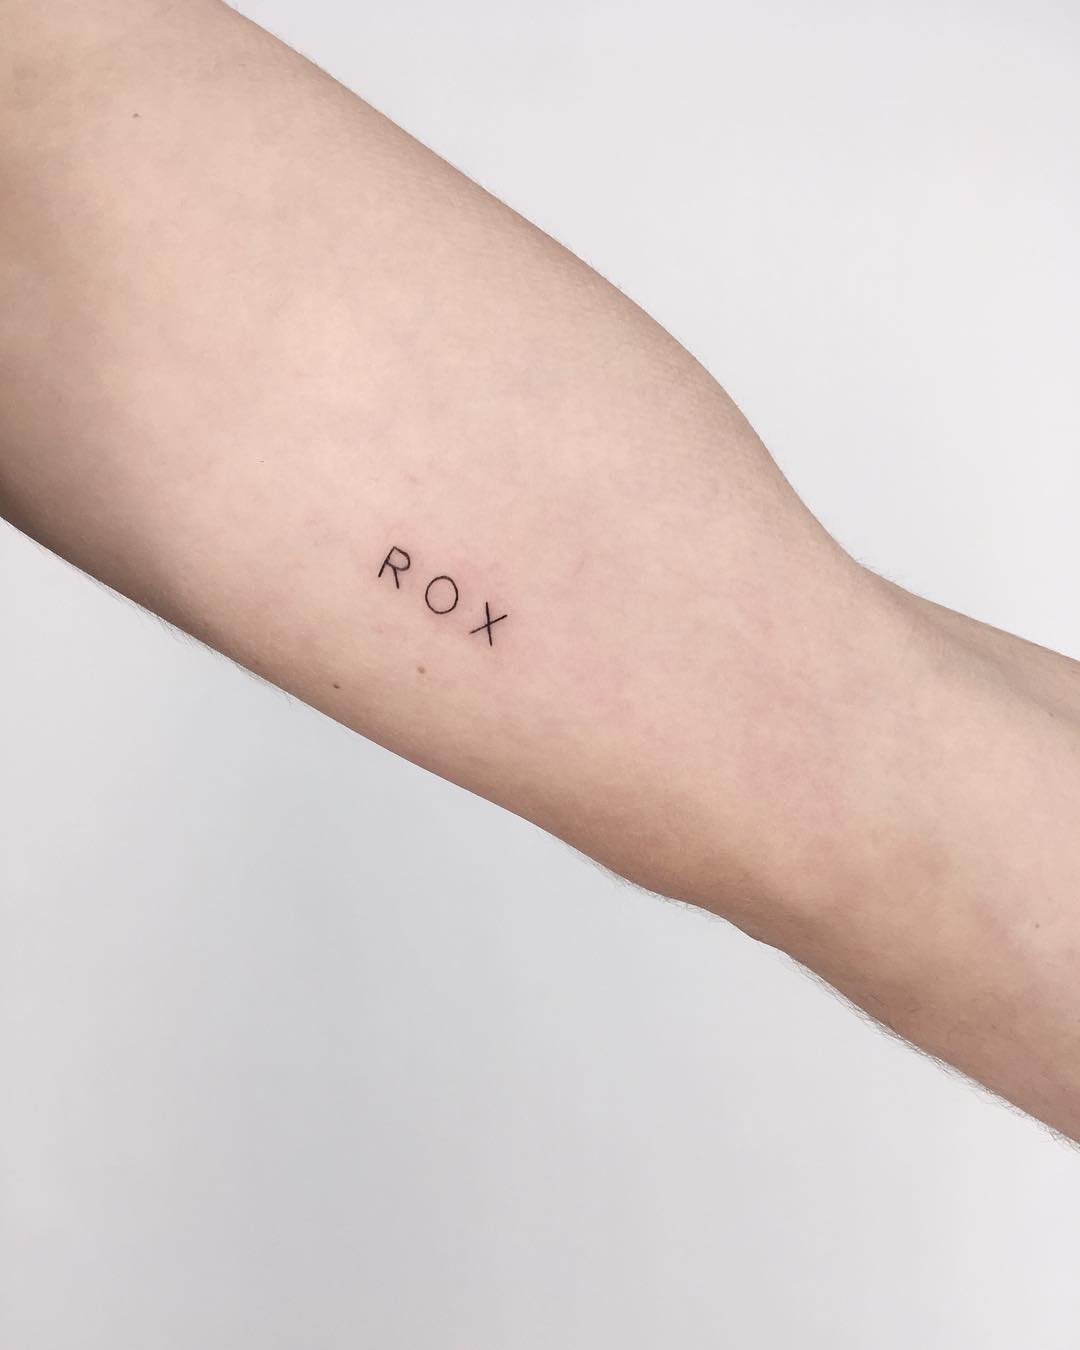 ROX tattoo by Gianina Caputo